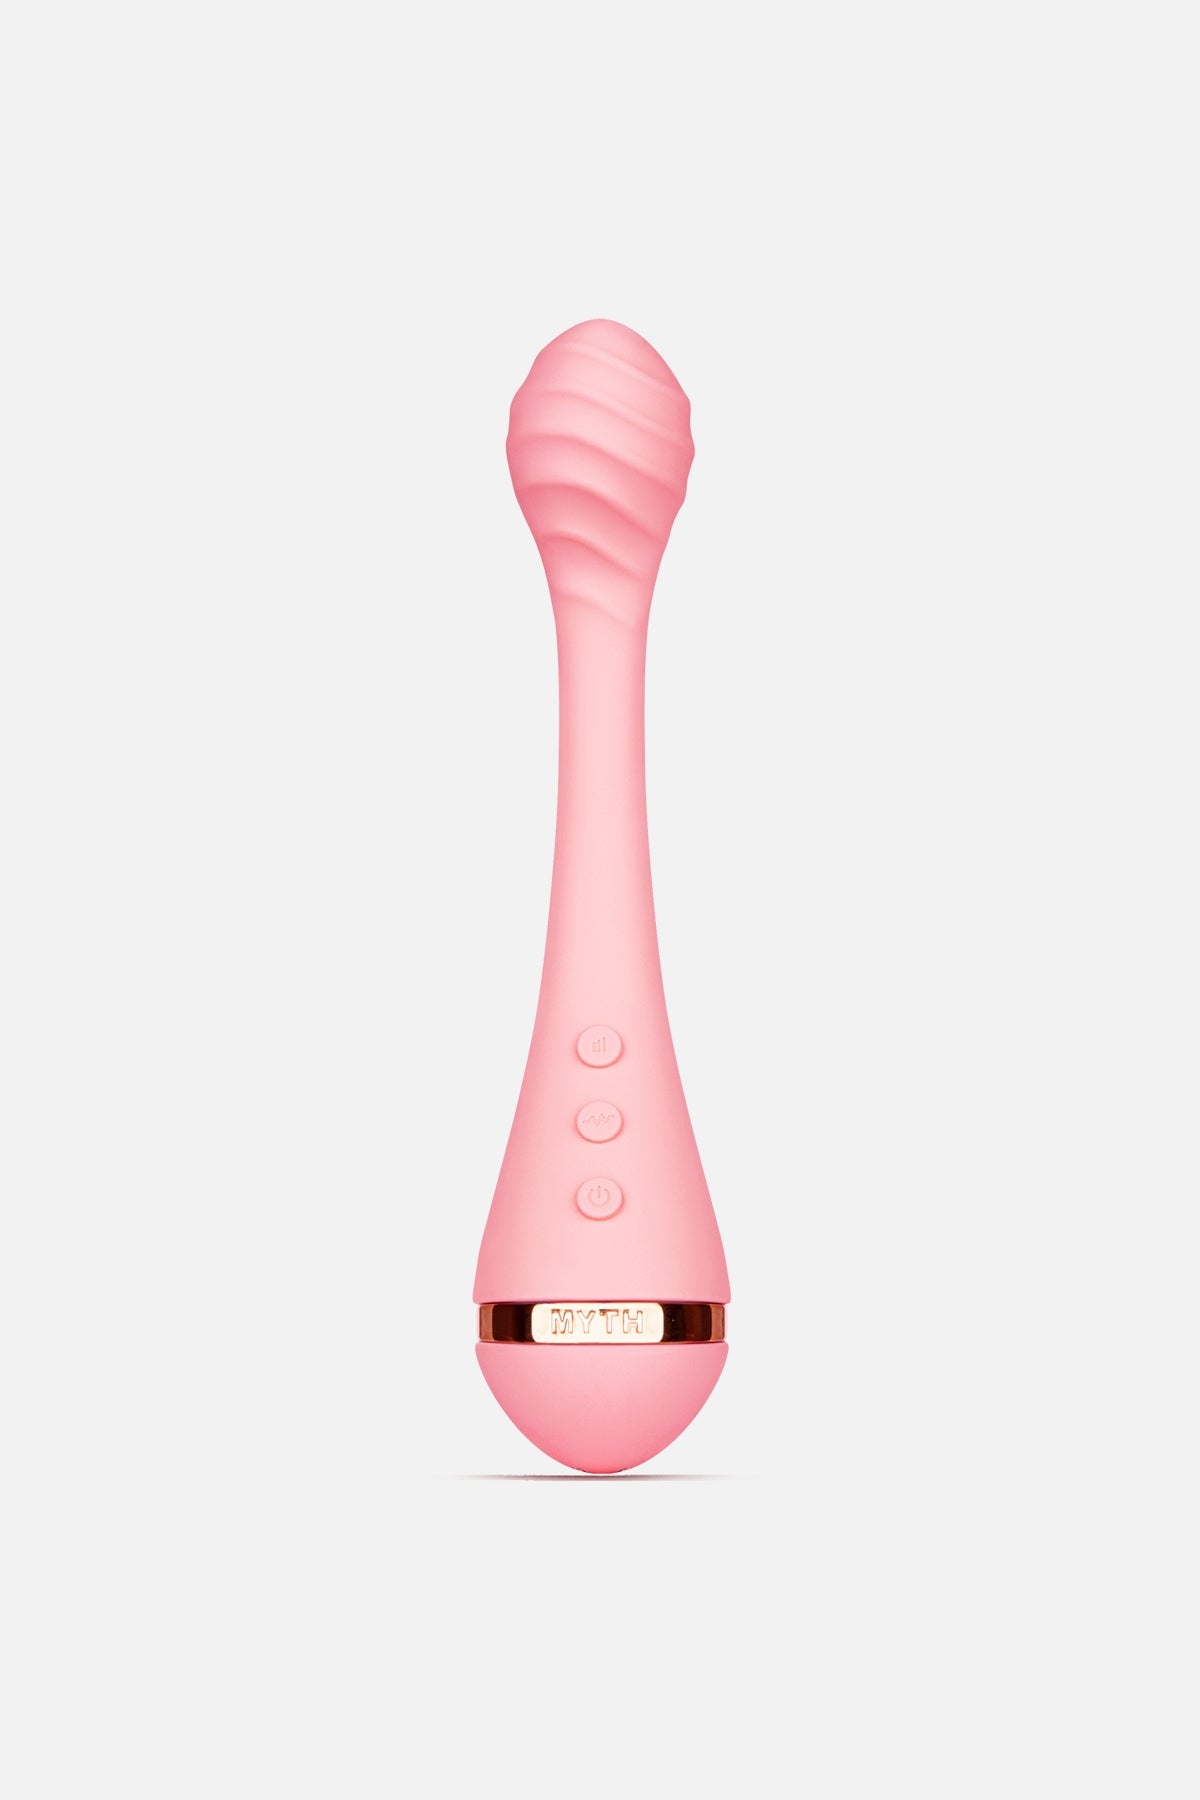 Vush Myth G-Spot Vibrator Pink